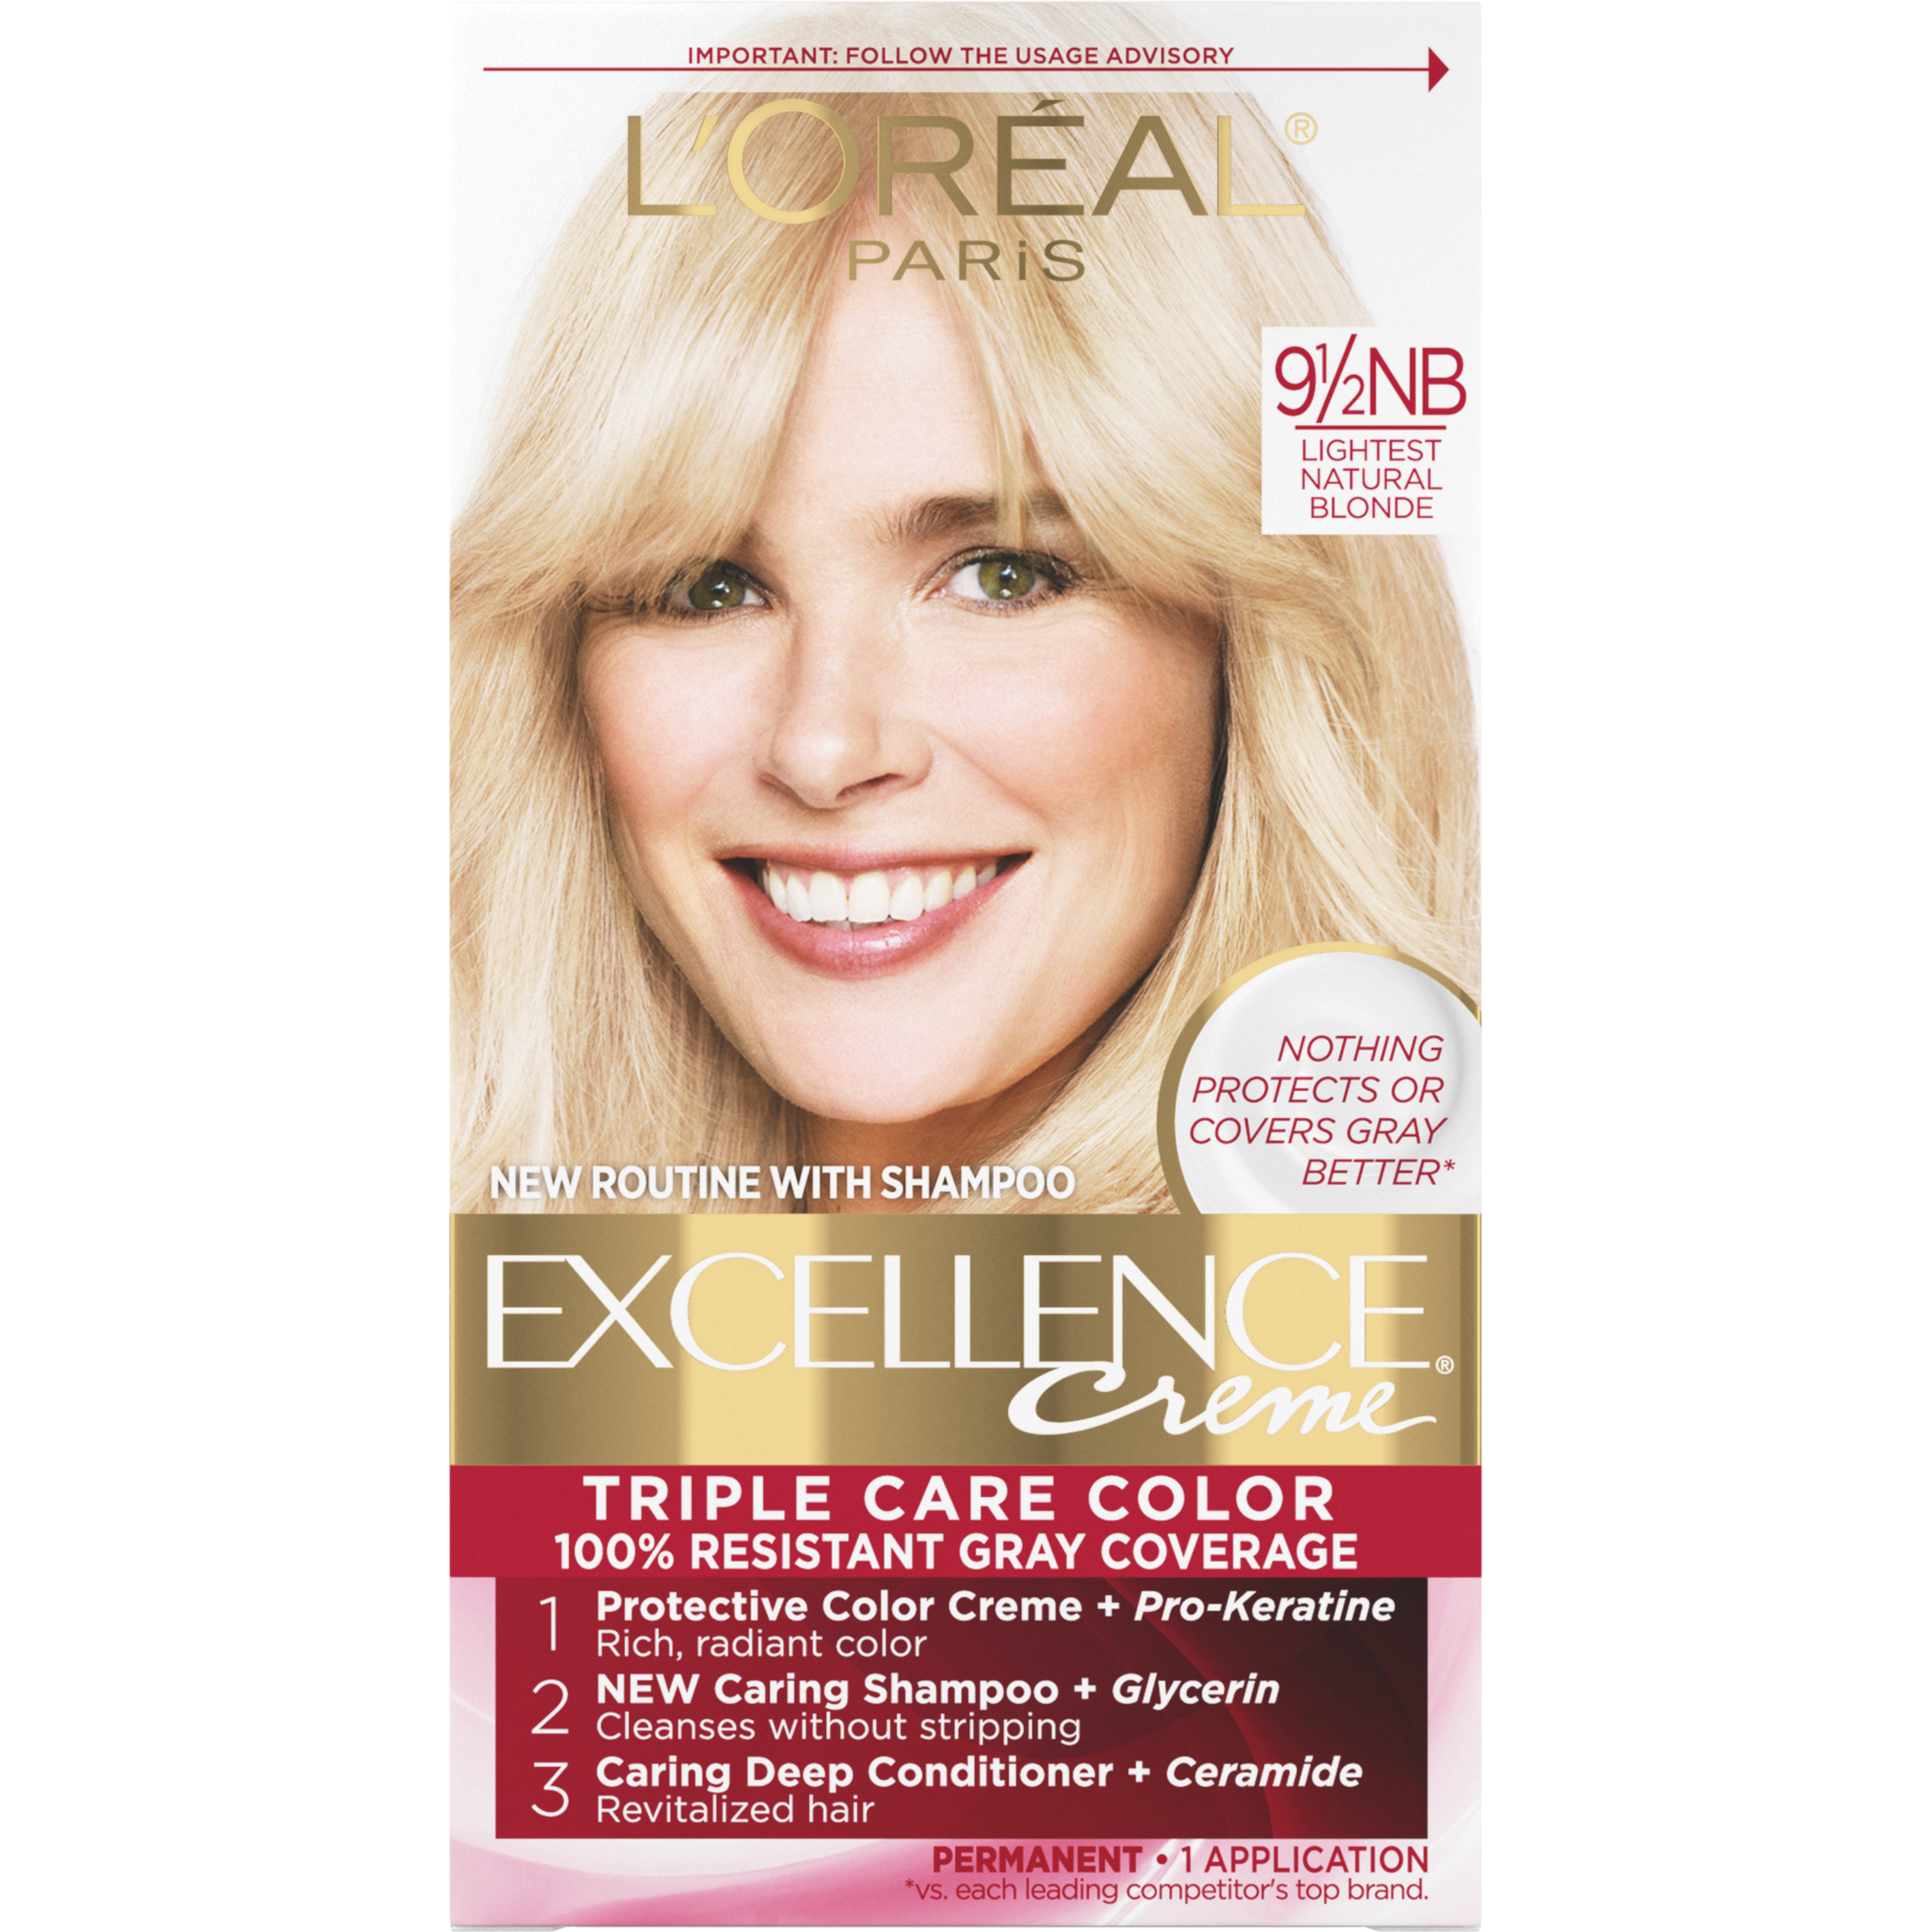 L'Oreal Paris Excellence Creme Permanent Hair Color, 9.5NB Lightest Natural Blonde - image 1 of 8